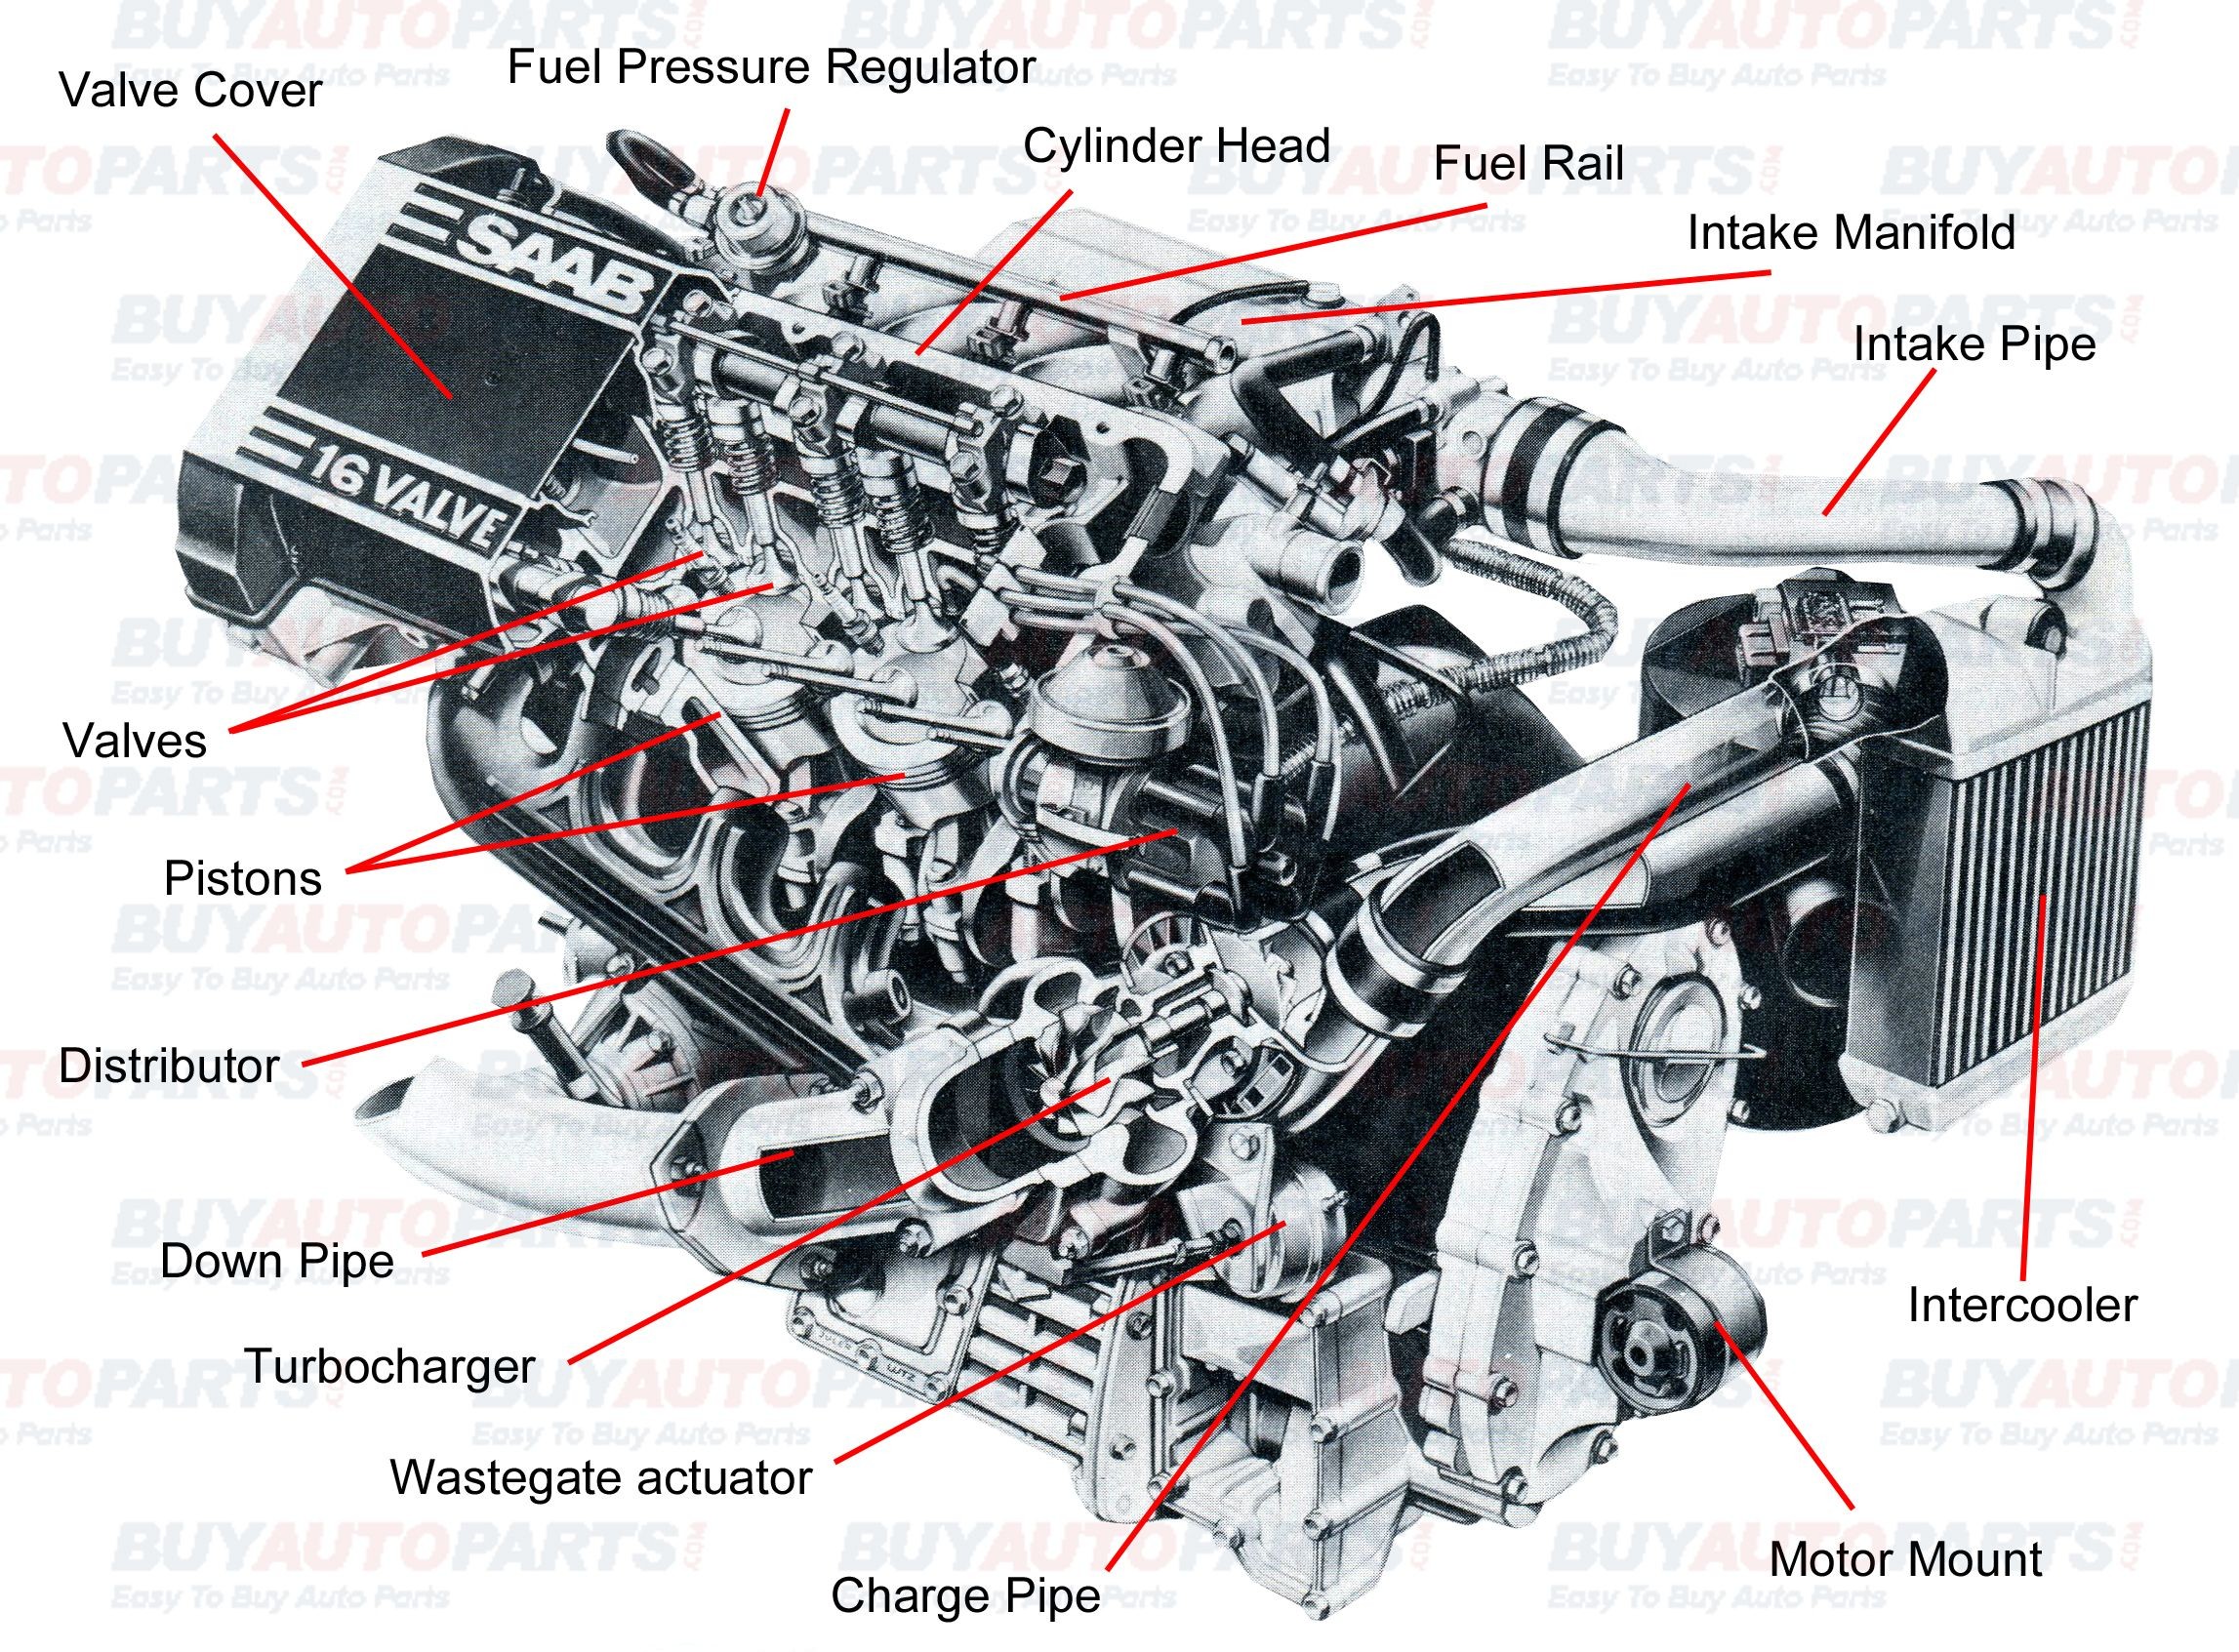 Car Engine Diagram for Driving Test Car Engine Parts Names 03 Charts Free Diagram Images Car